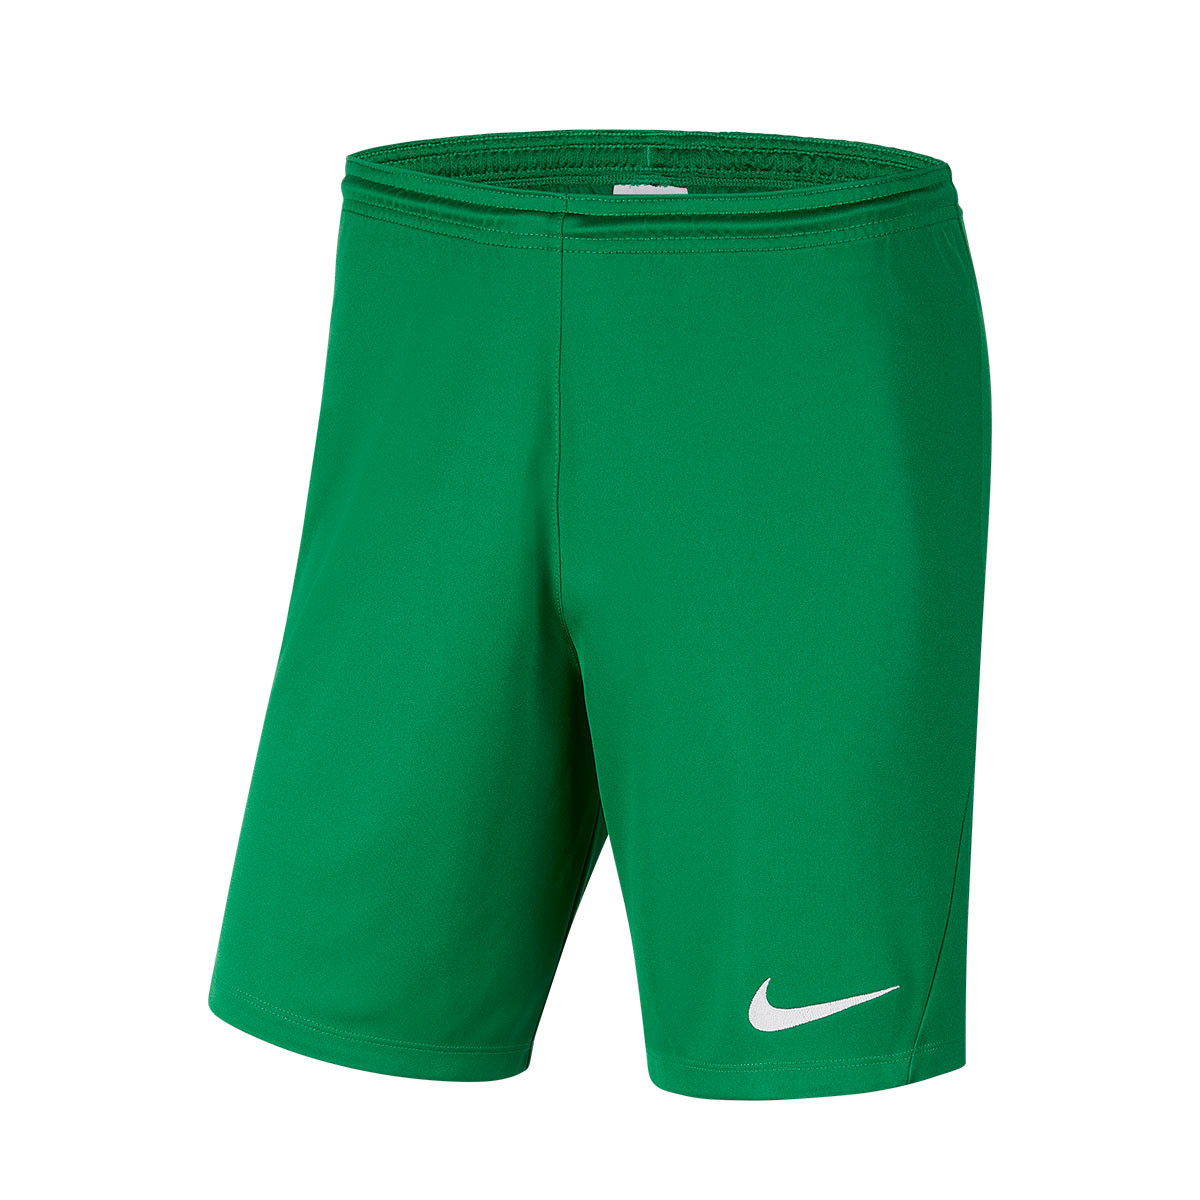 Shorts Nike Park III Knit Pine green 